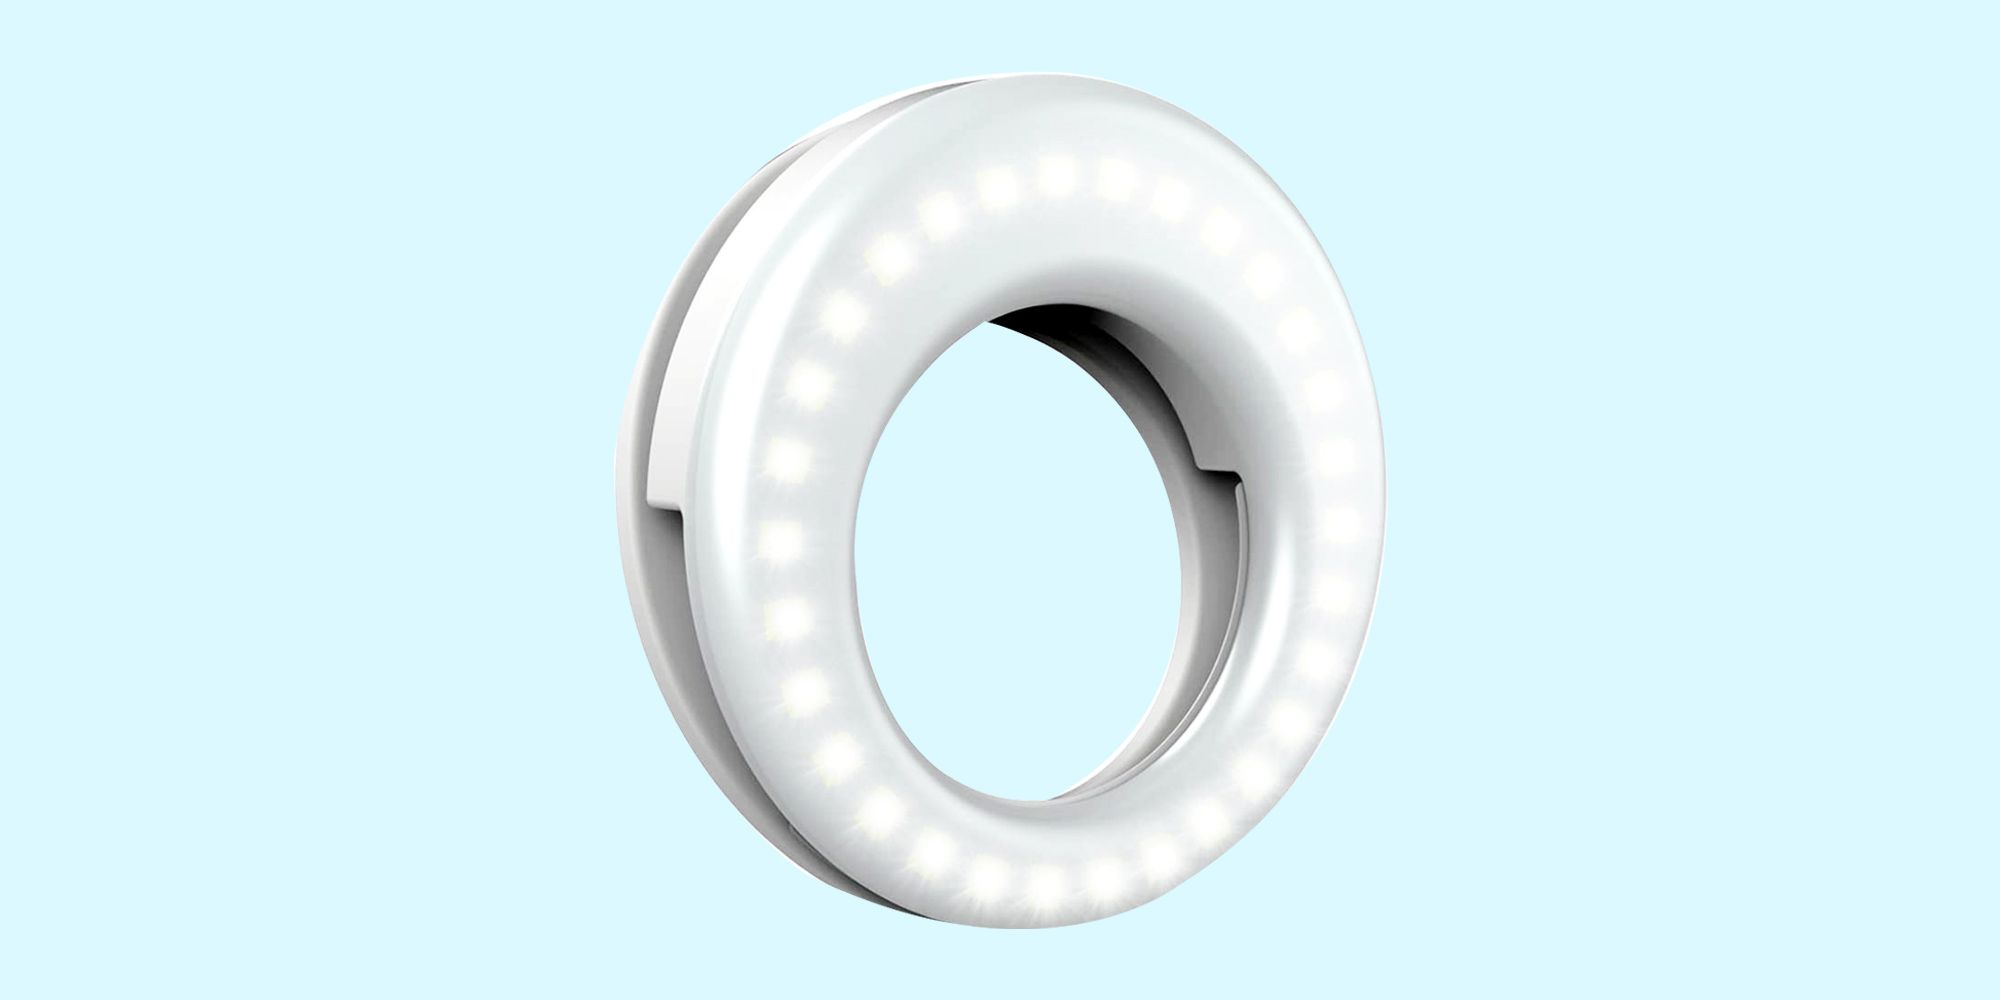 JACKYLED 10 LED Selfie Ring Light 3 Color Modes with India | Ubuy